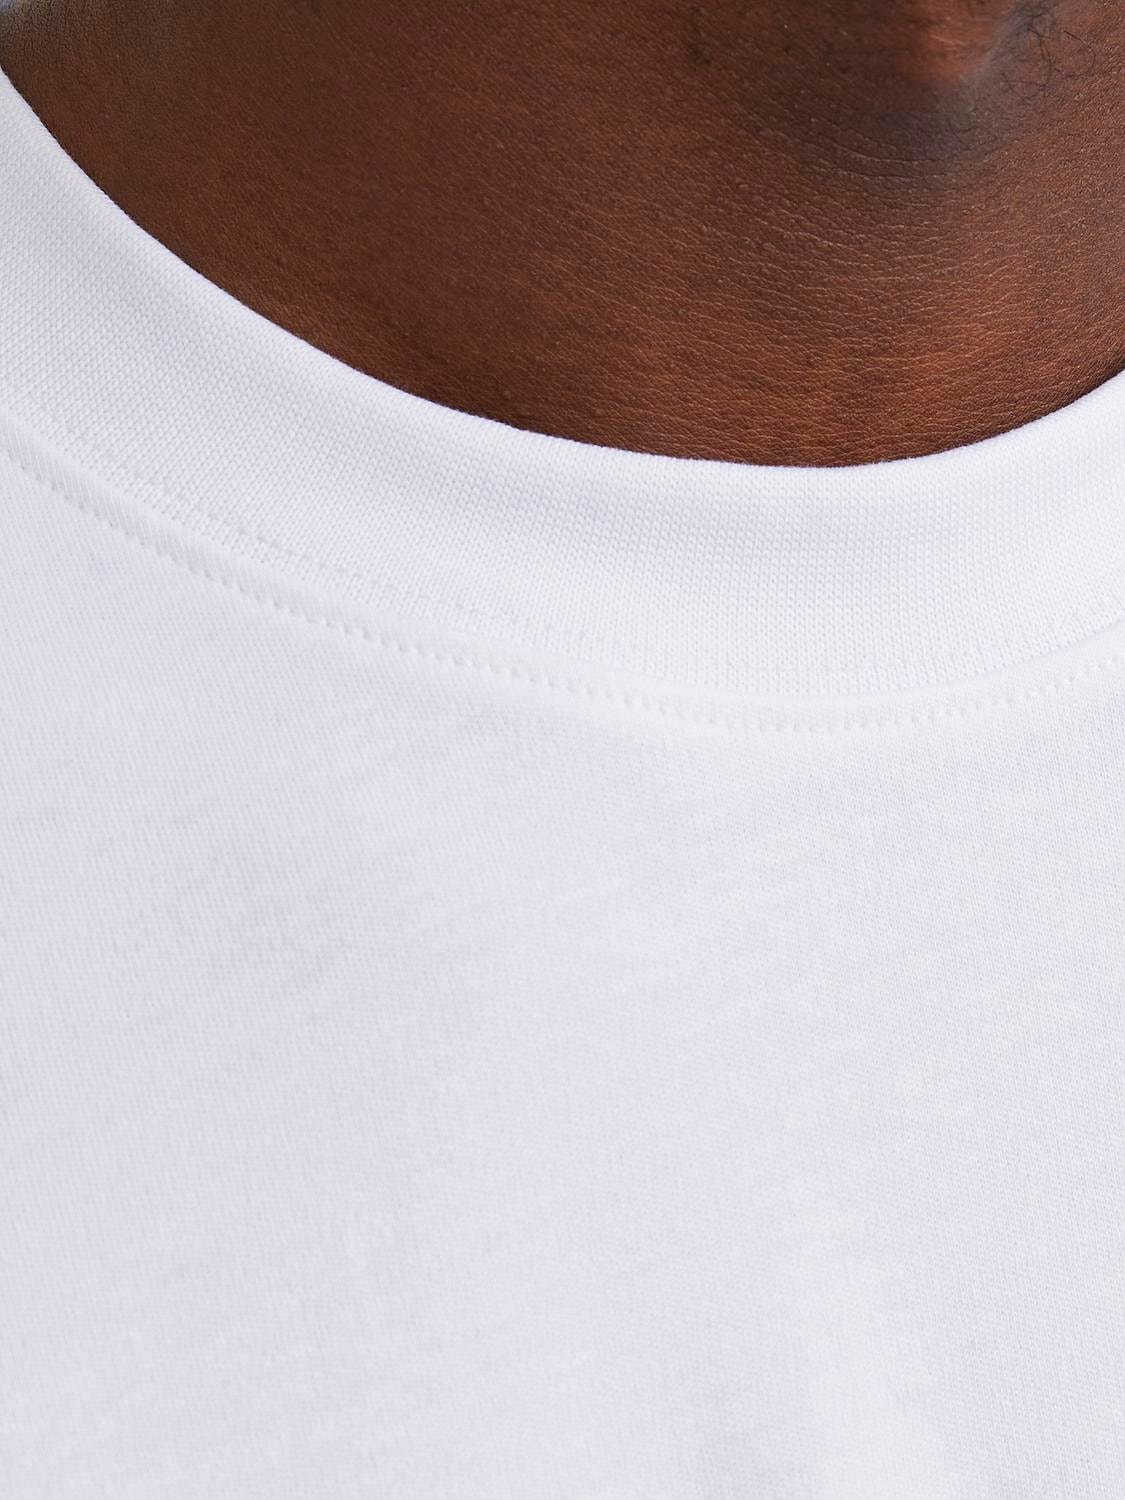 Jack & Jones Plain Crew neck T-shirt -White - 12251351